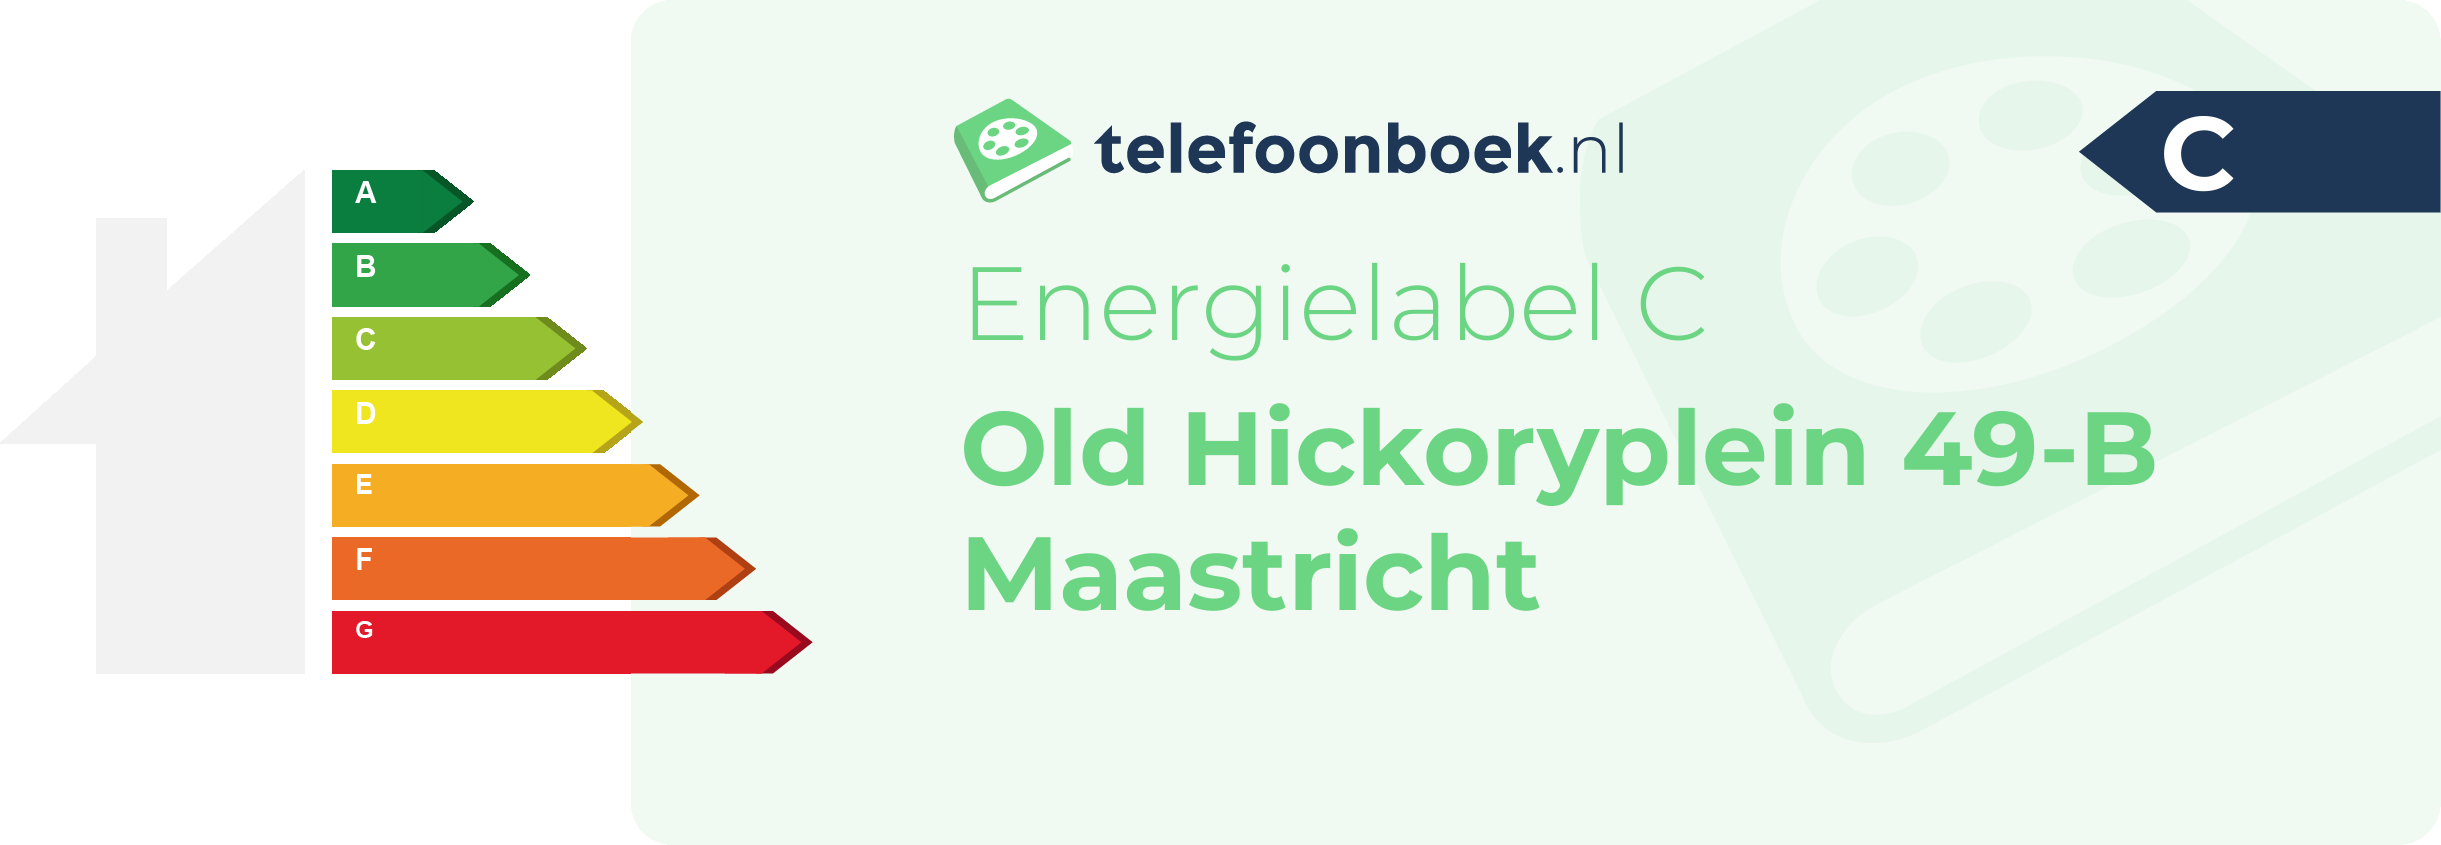 Energielabel Old Hickoryplein 49-B Maastricht